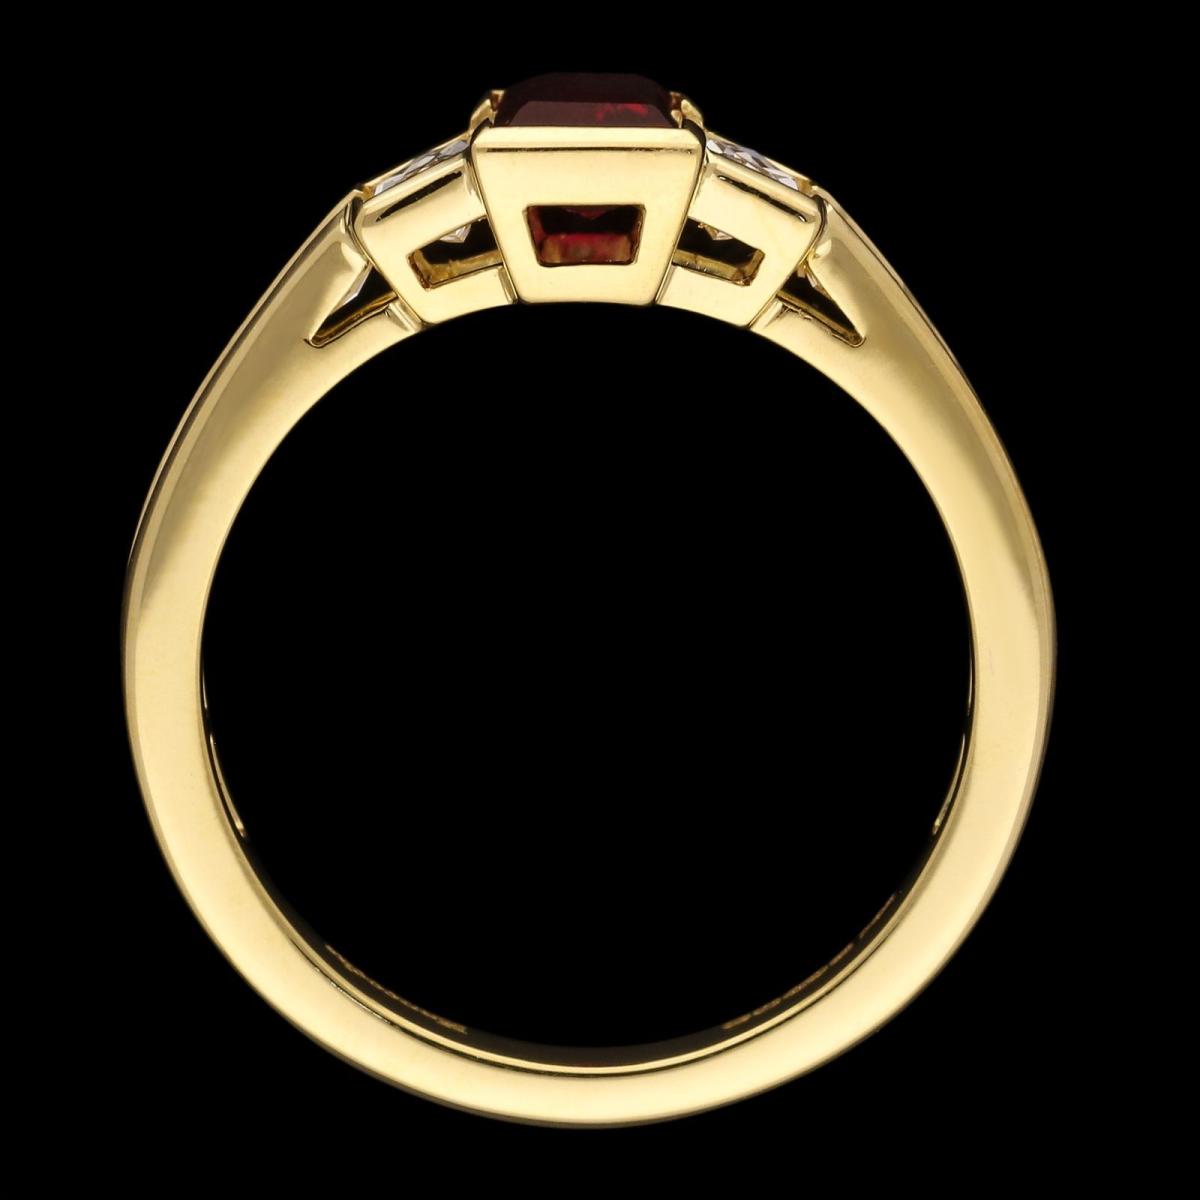 Hancocks 1.10ct Burma Ruby And French Cut Diamond Ring Contemporary